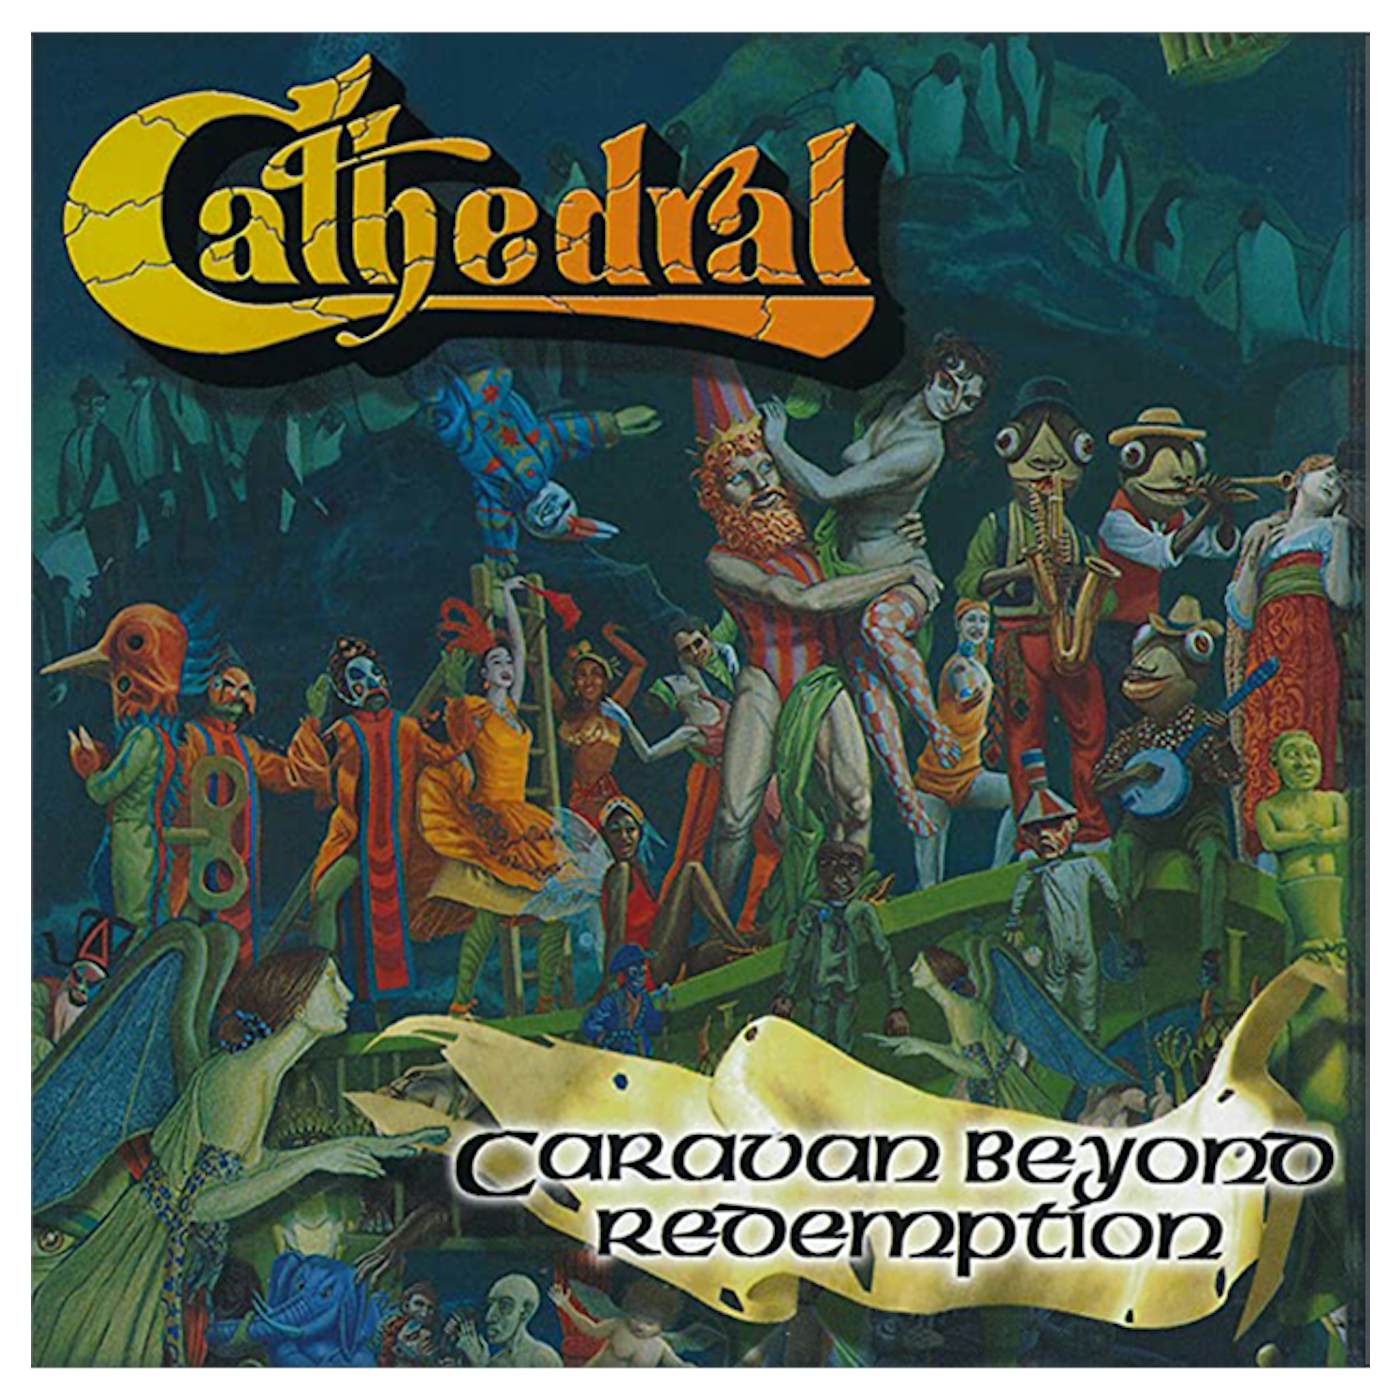 CATHEDRAL - 'Caravan Beyond Redemption' DigiCD